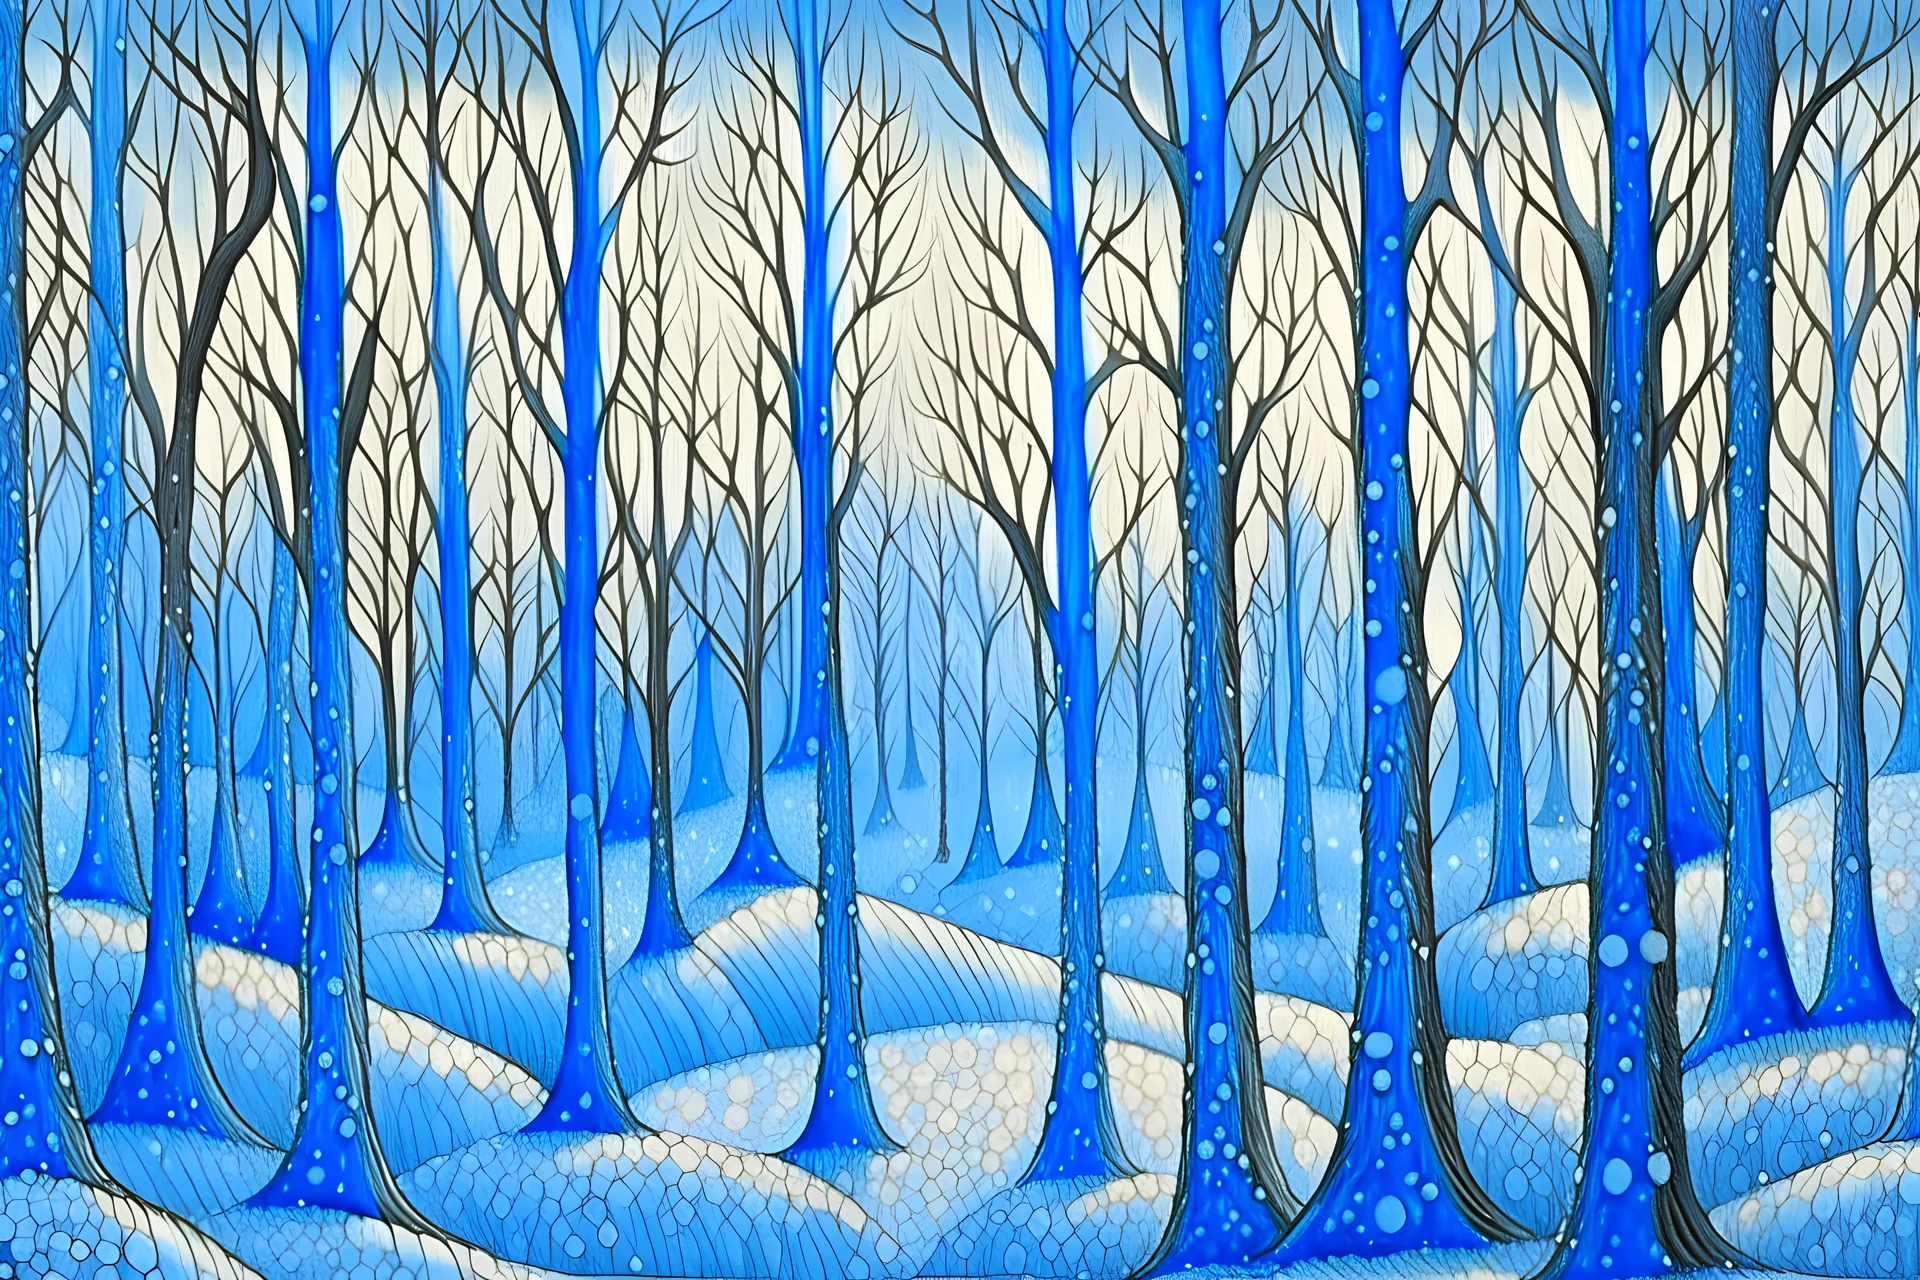 Winter trees elegant fantasy intricate art deco fantasy watercolor mystic Paul Klee Tim burton Yacek Yerka dee Nickerson snow winter cold season simple design